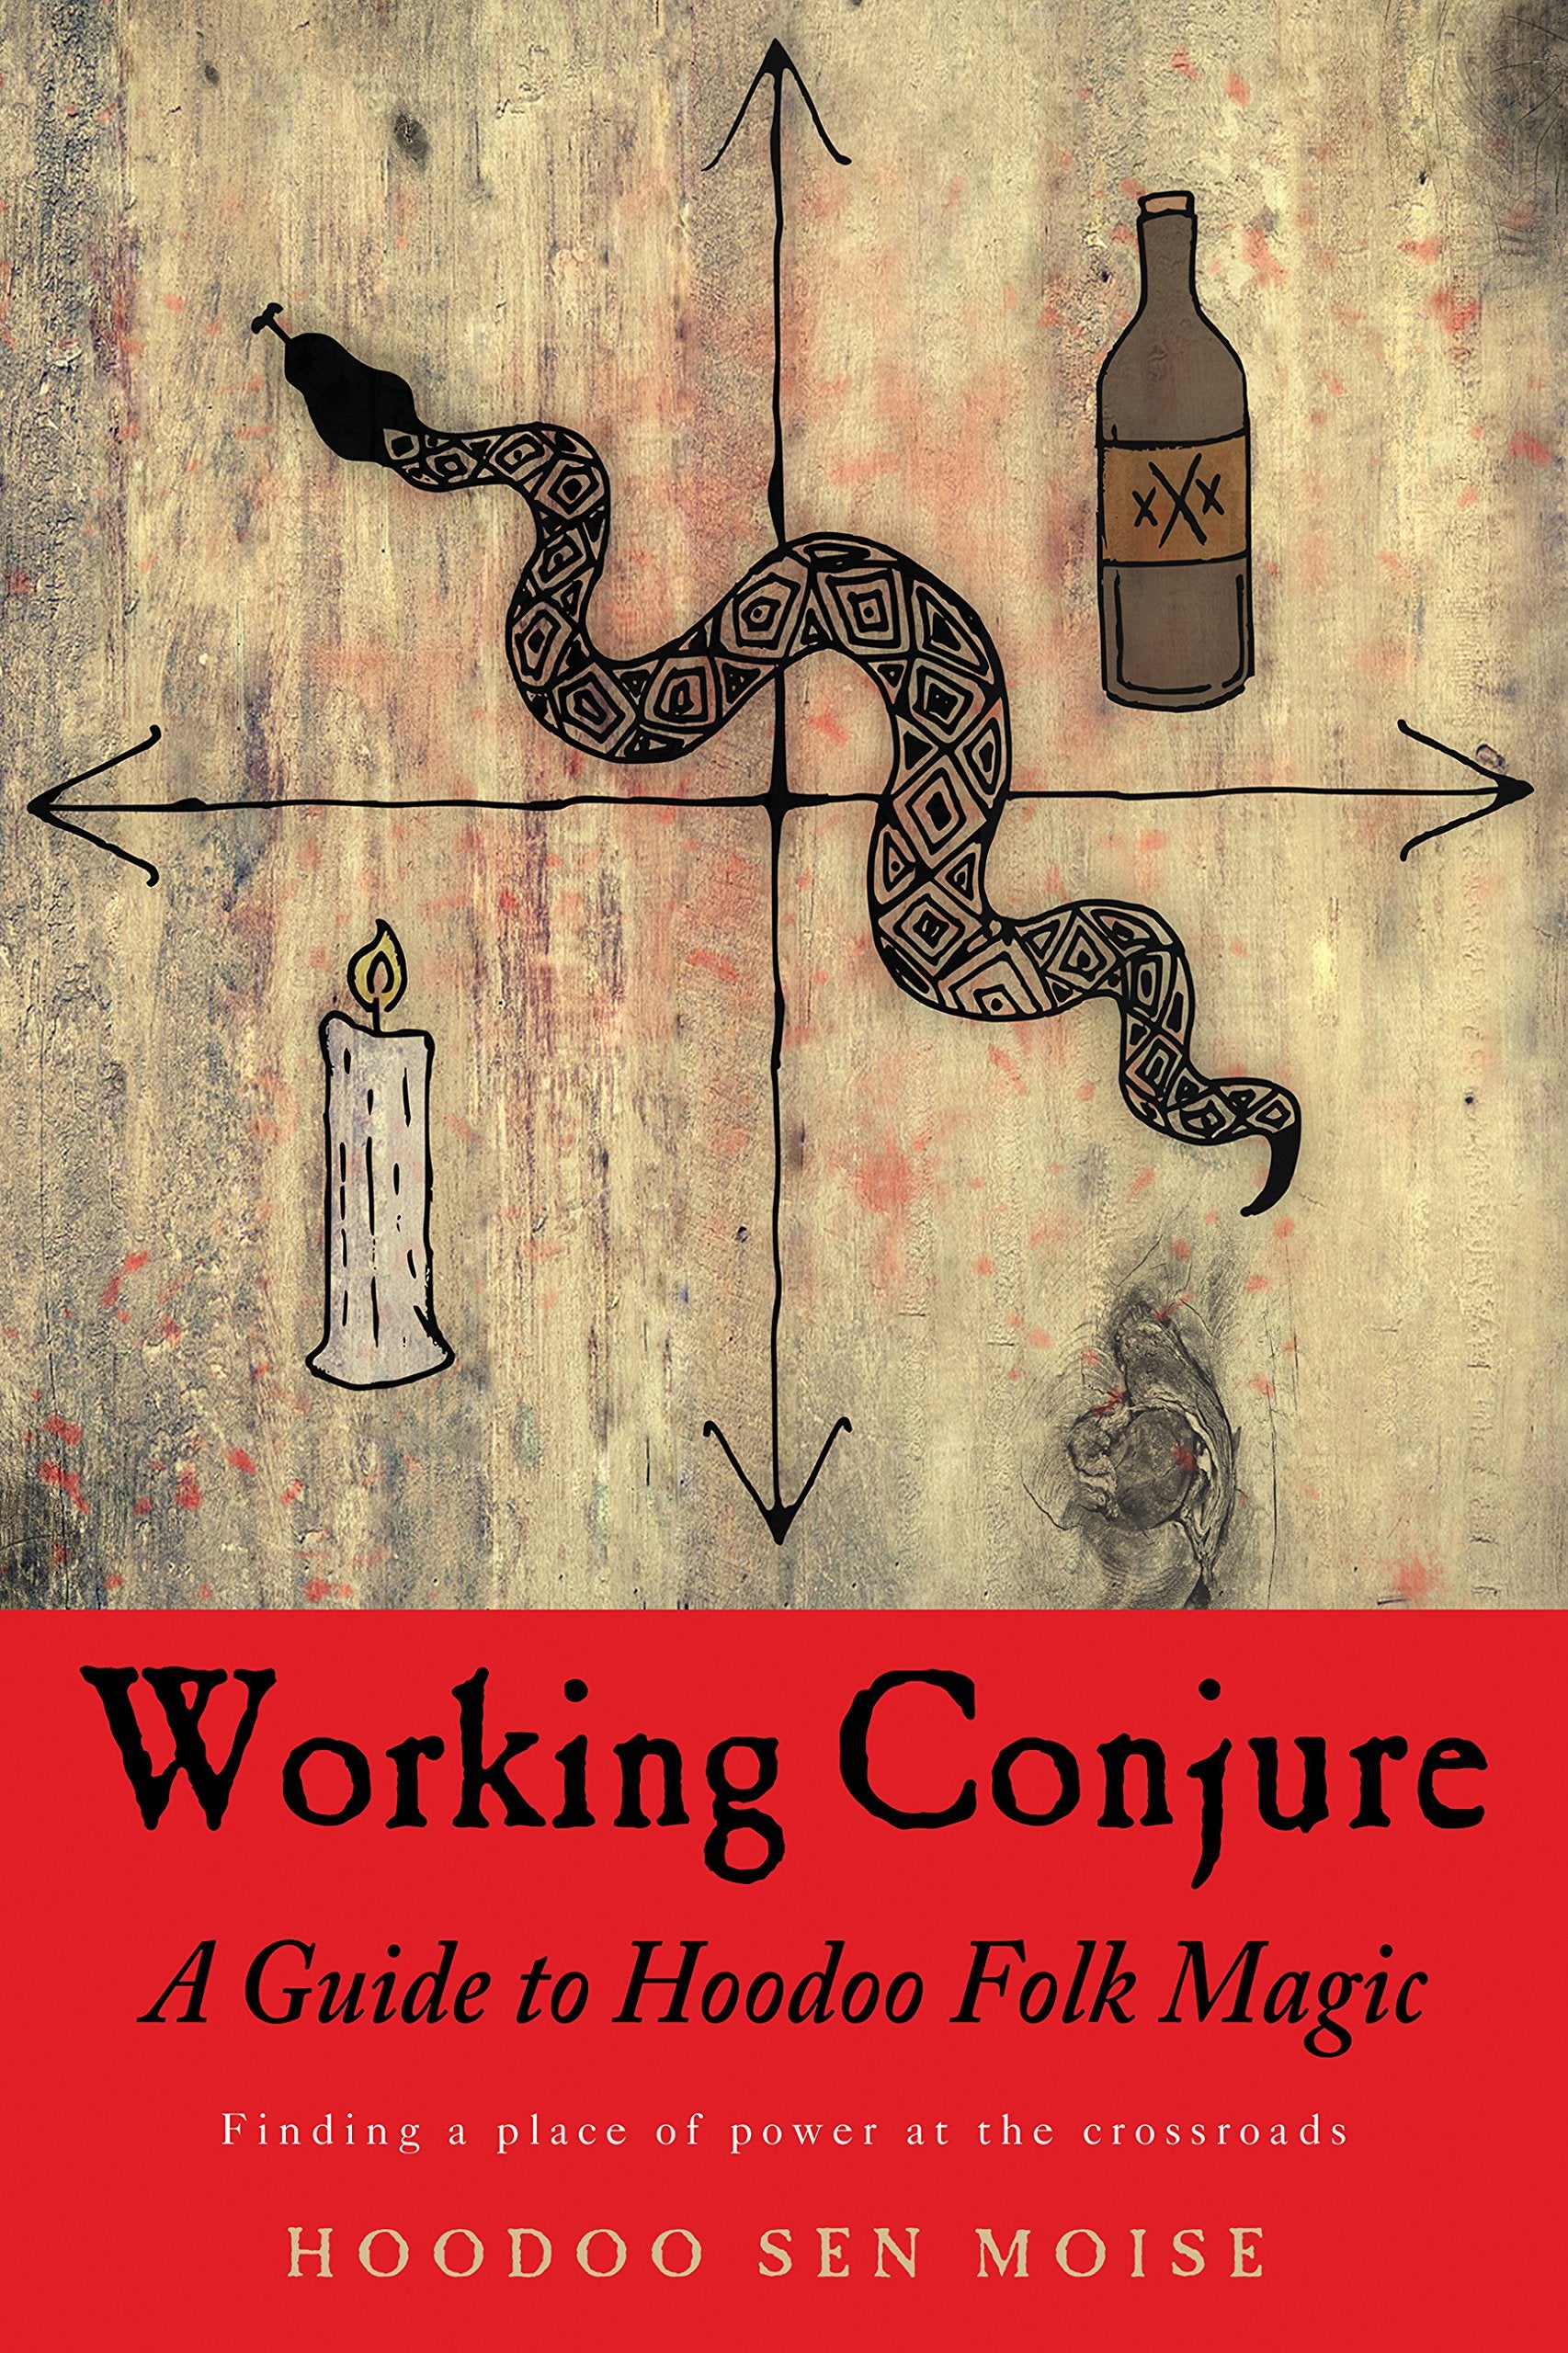 Working Conjure: A Guide to Hoodoo Folk Magic by Hoodoo Sen Moise